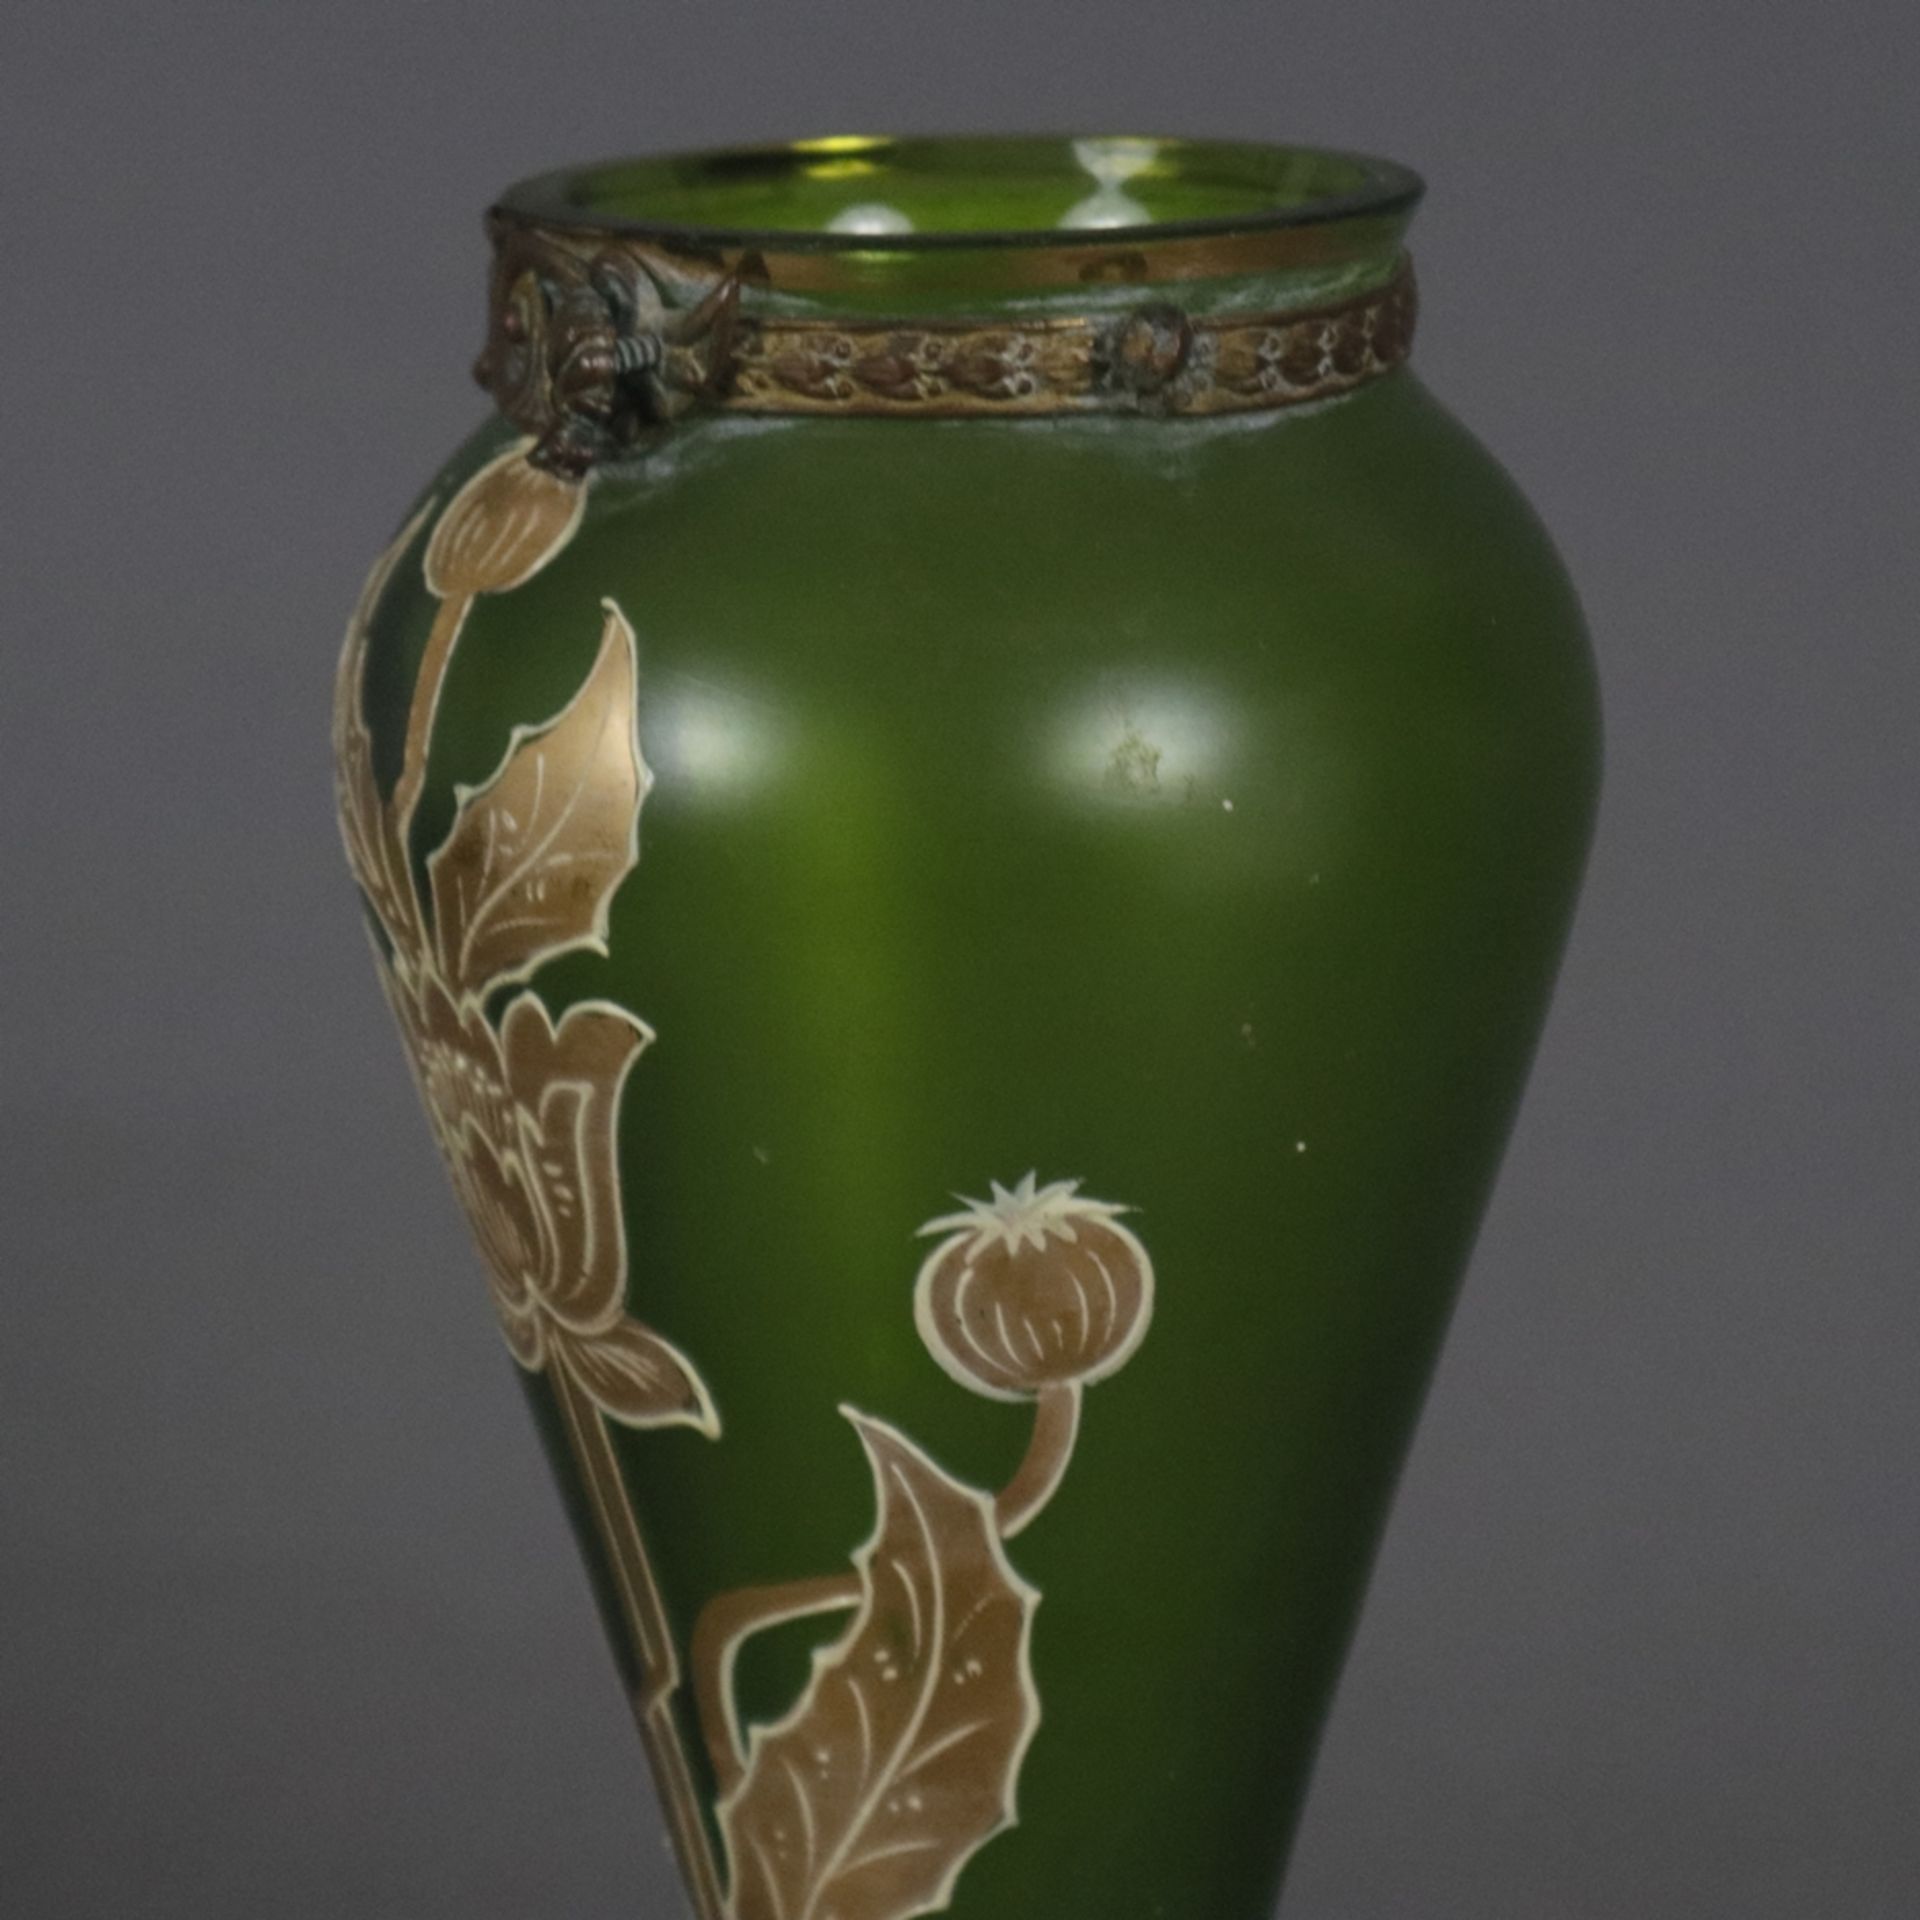 Jugendstil-Glasvase mit Metallmontur - wohl Frankreich um 1900, Klarglas mit grünem Unterfang, scha - Image 7 of 8